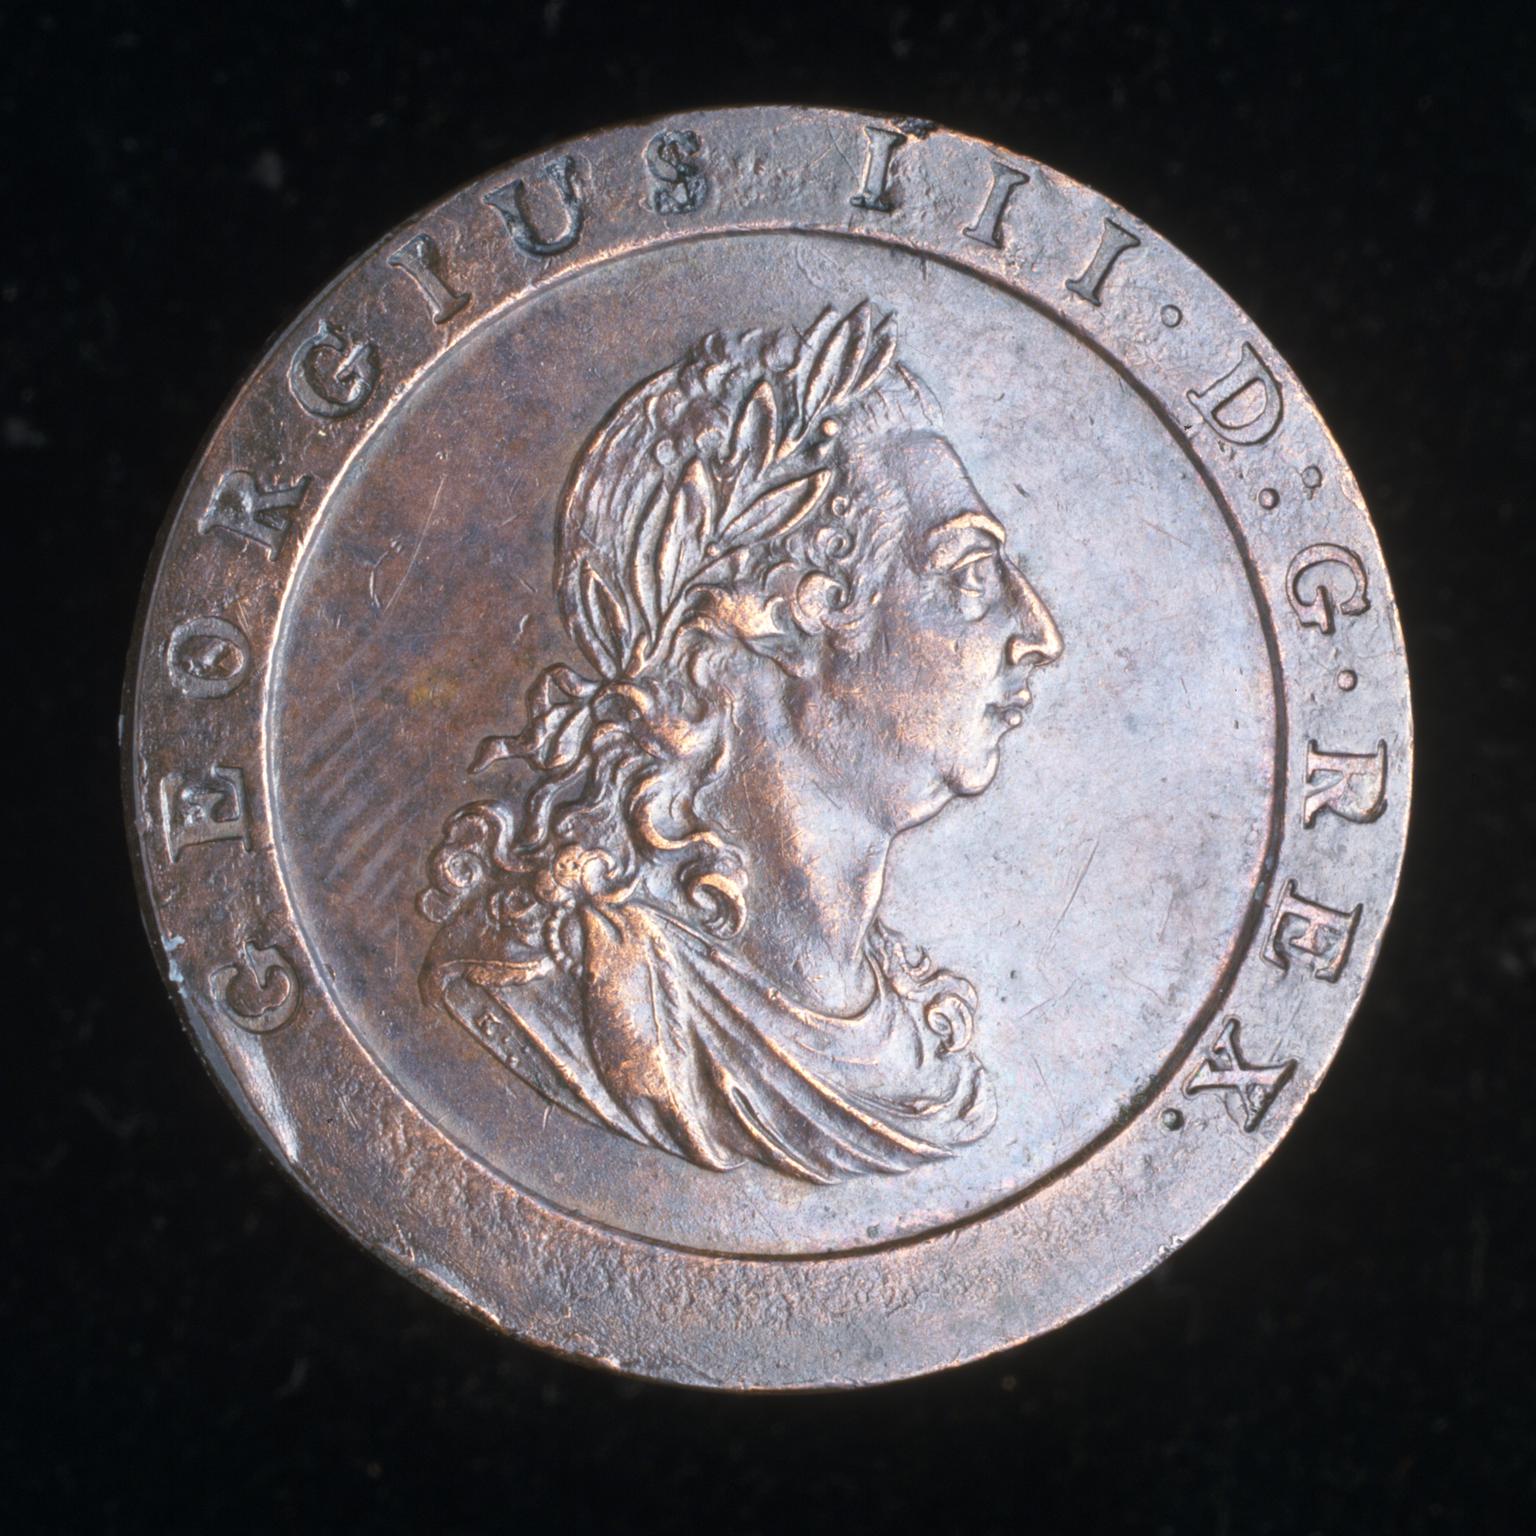 George III penny